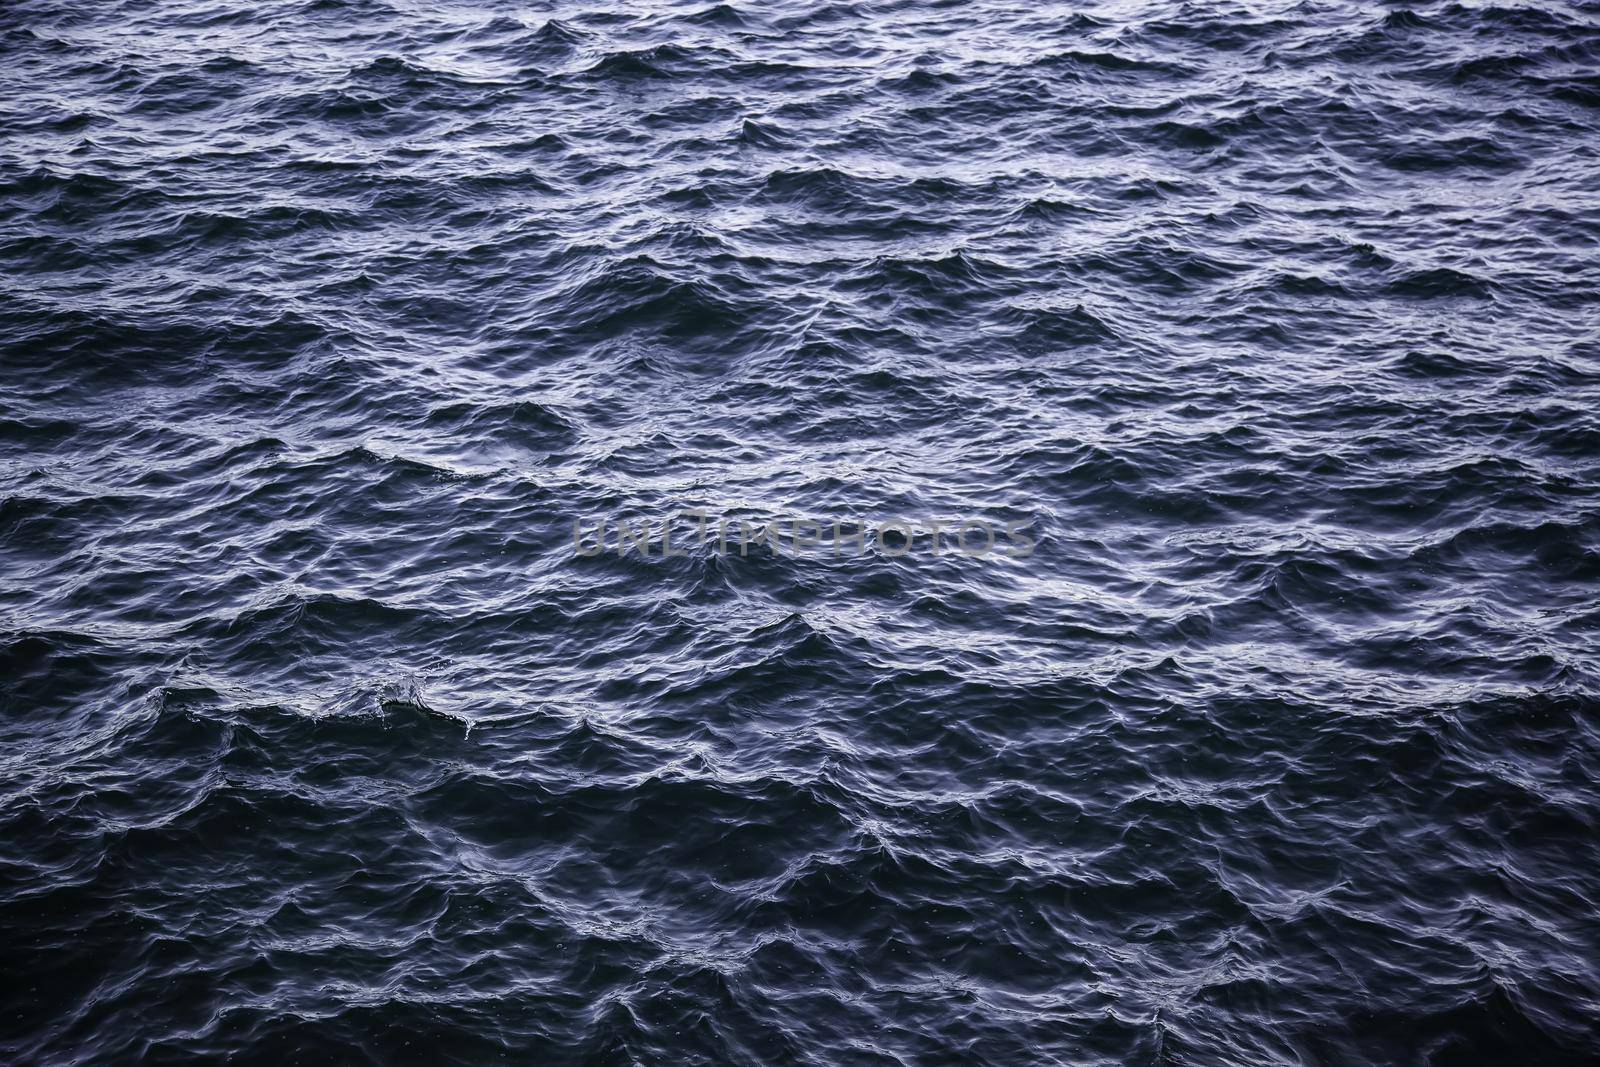 Detail of salt water offshore, nature by esebene